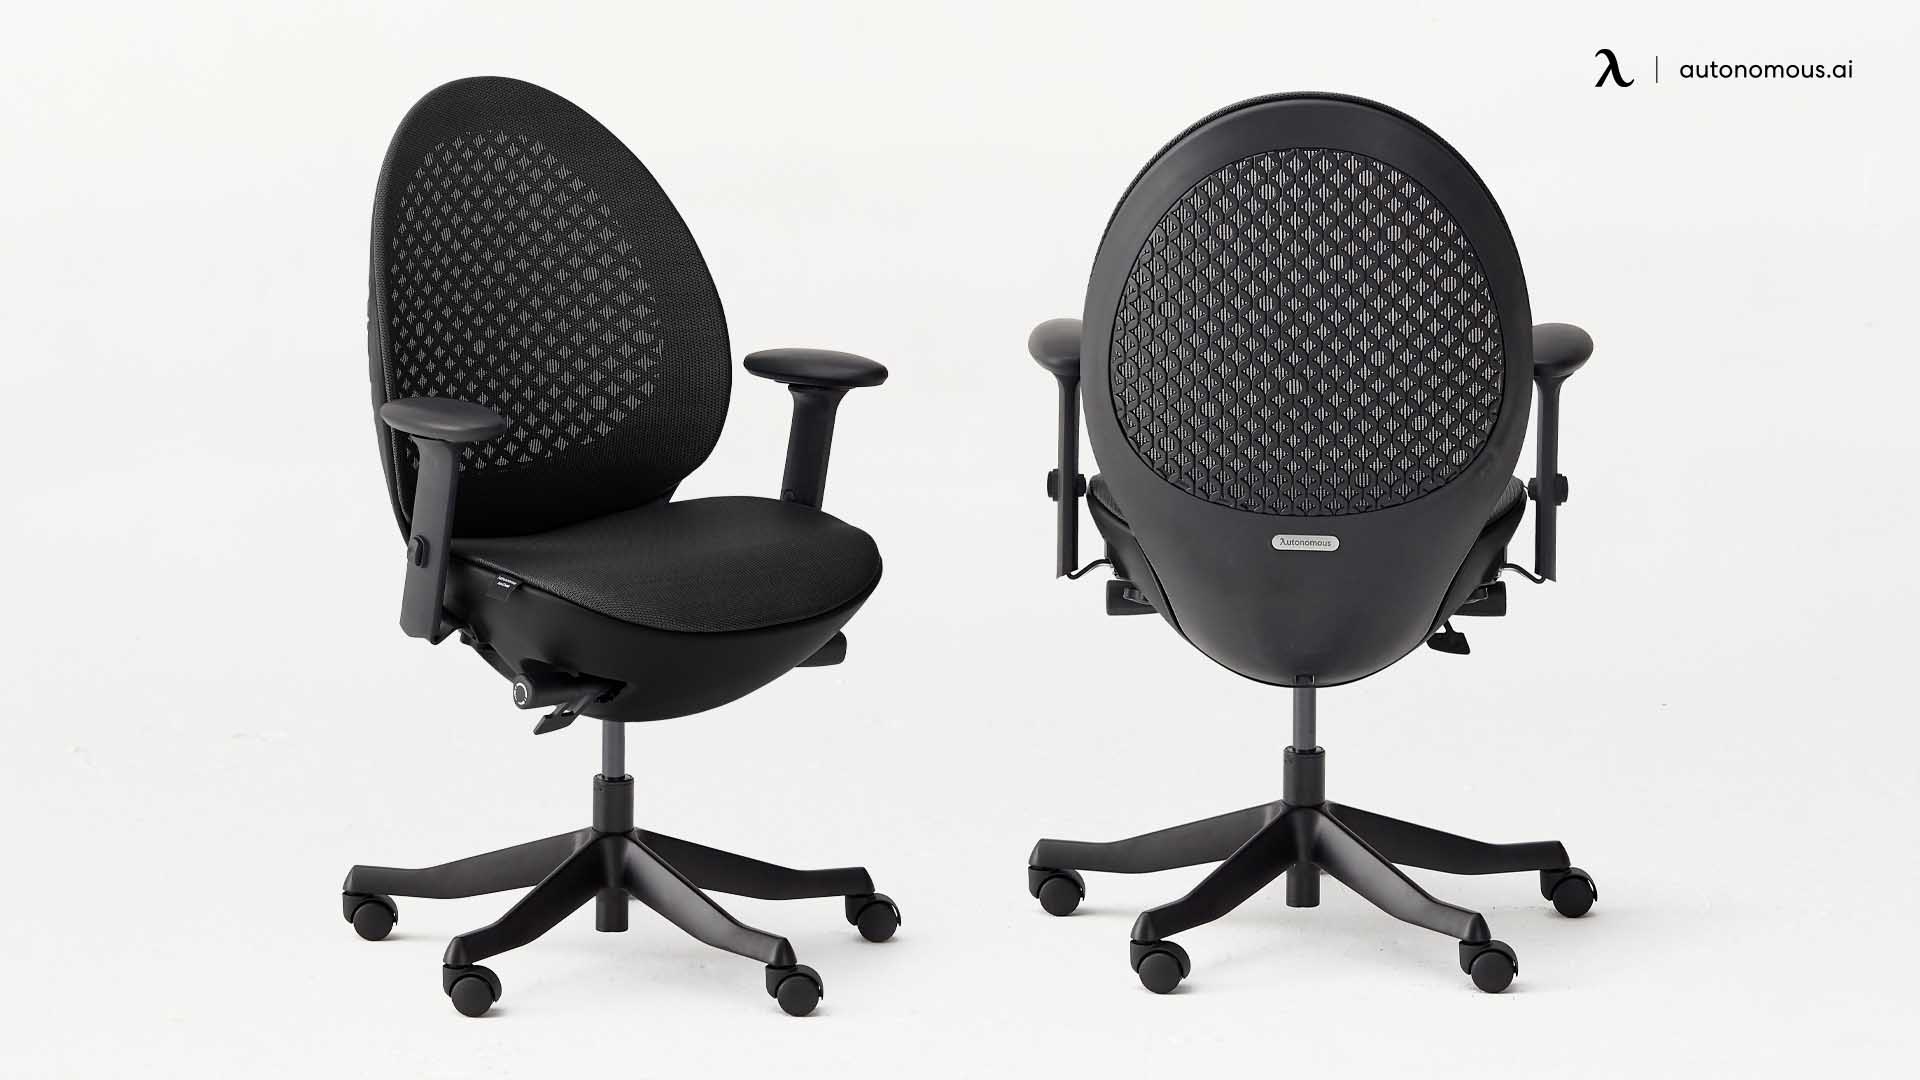 The black ergonomic chair AvoChair